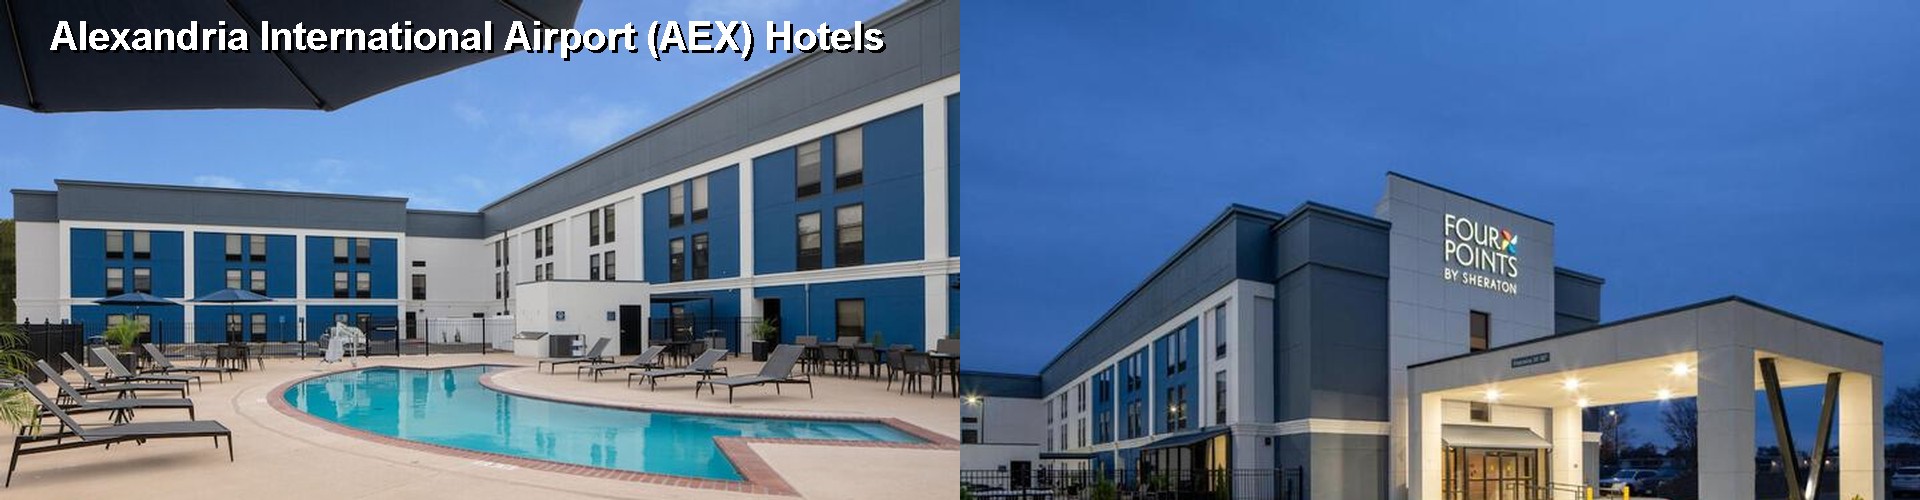 4 Best Hotels near Alexandria International Airport (AEX)